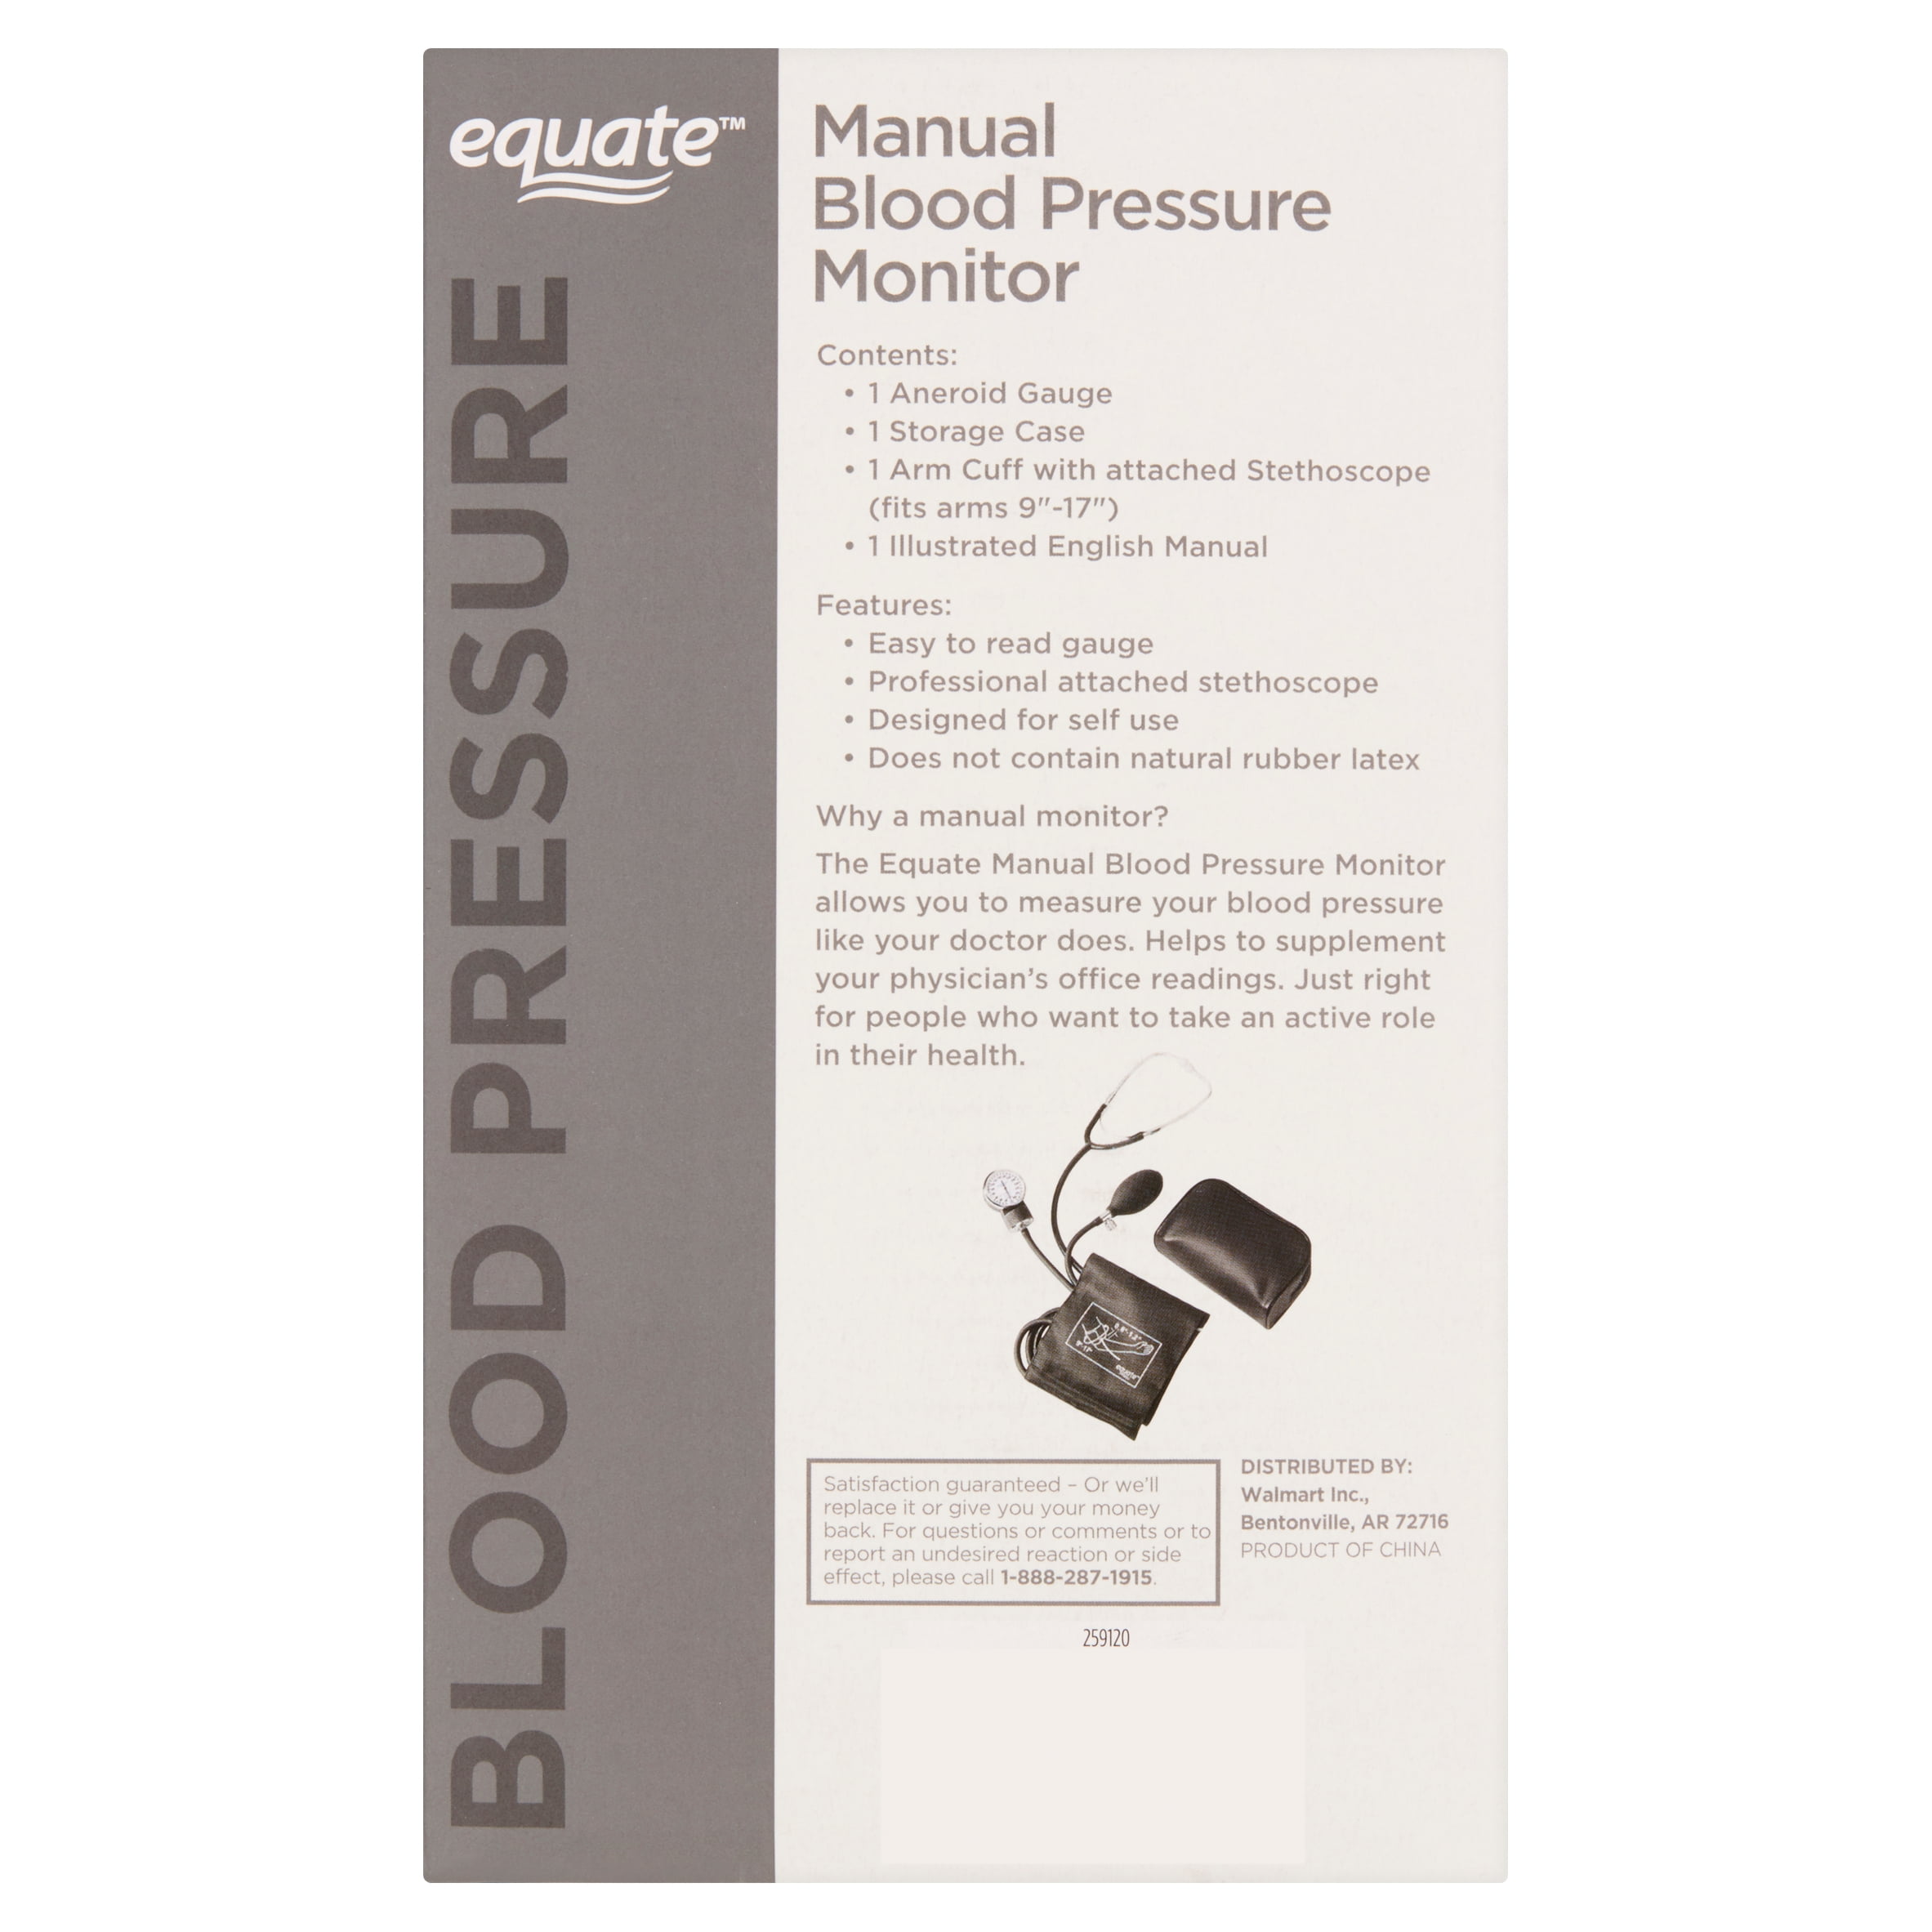 Equate (Walmart) 4000 series Blood Pressure Monitor Review